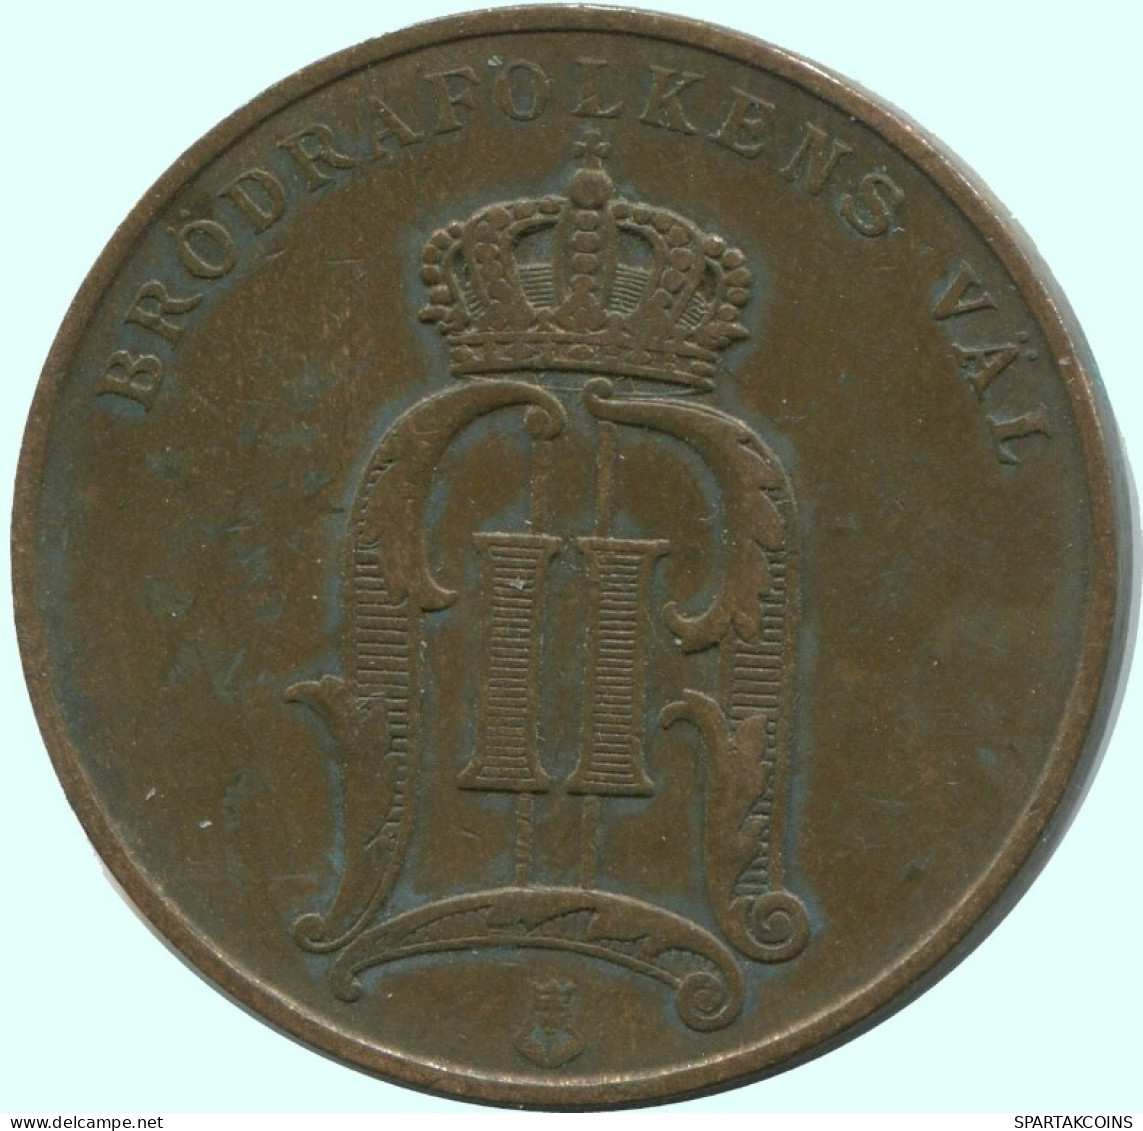 5 ORE 1899 SWEDEN Coin #AC660.2.U.A - Sweden